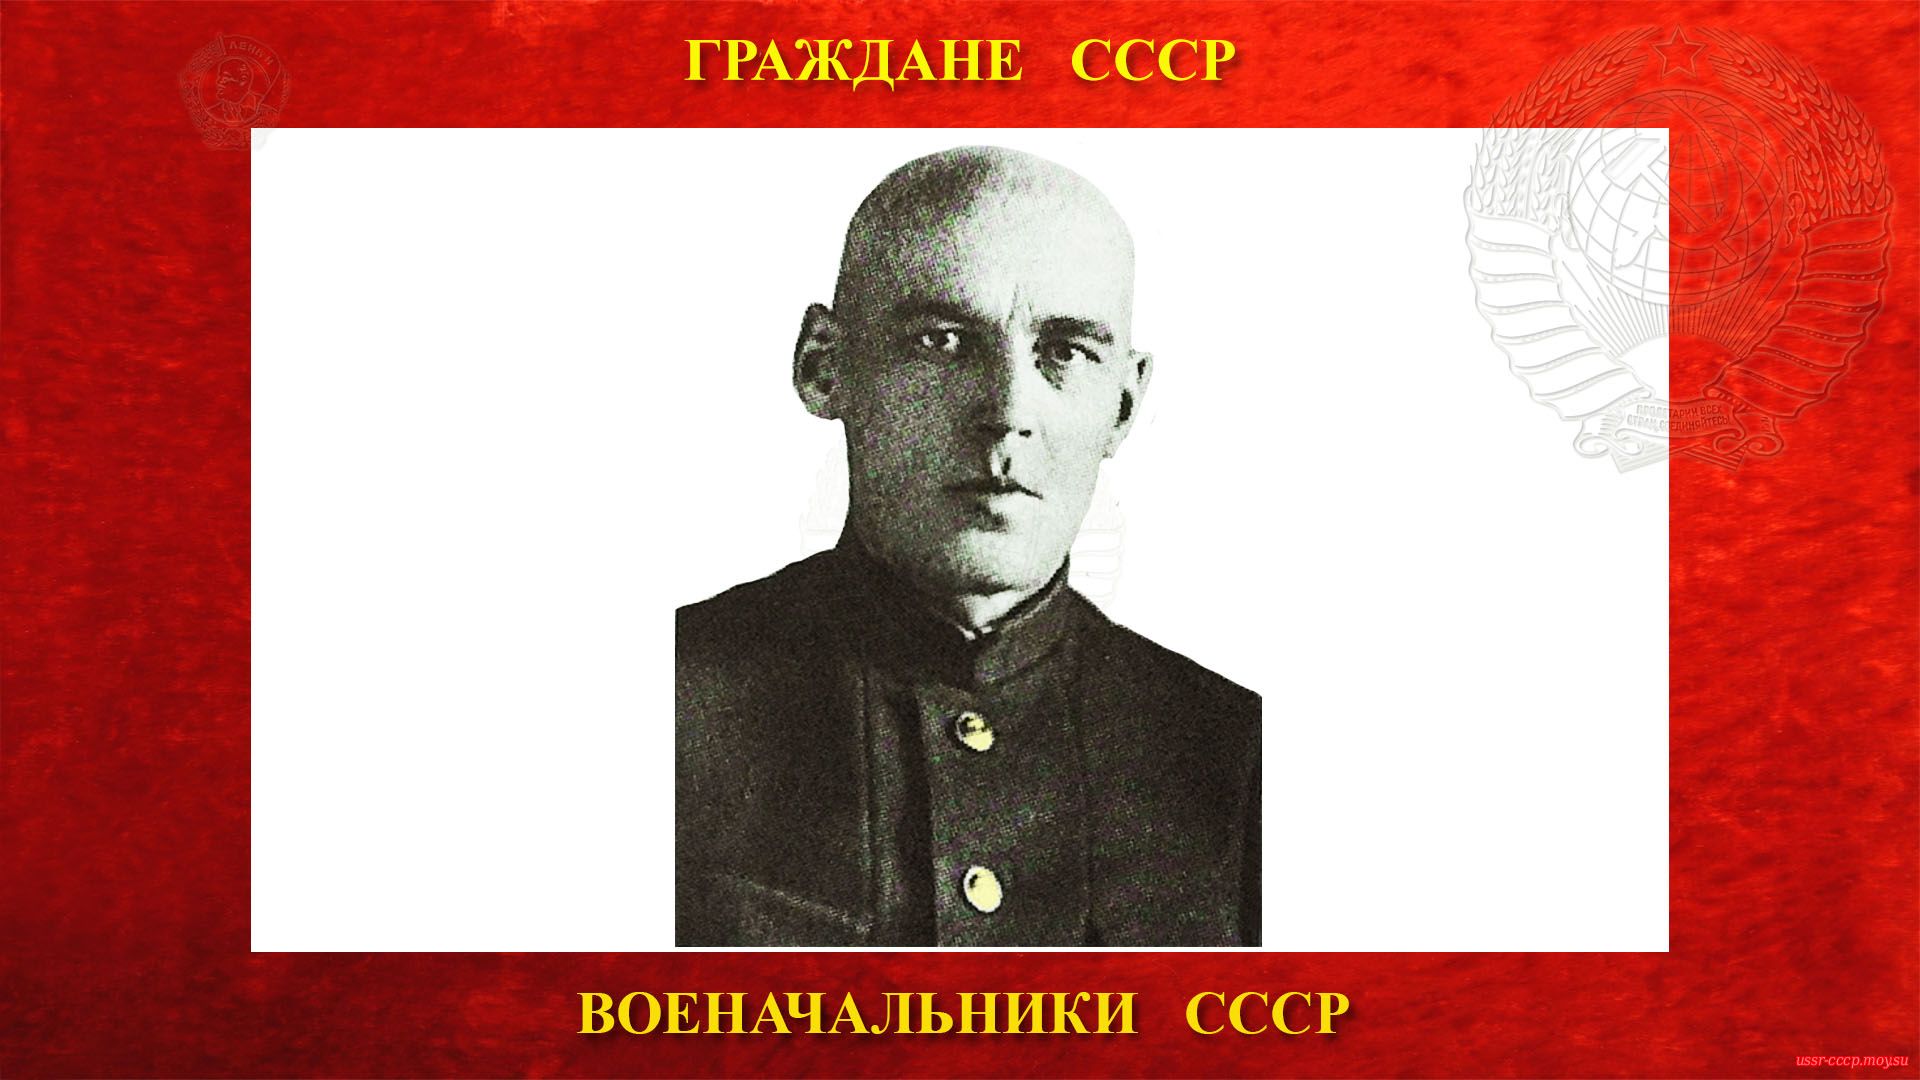 Васильев Александр Васильевич — Советский военачальник — Флагман 2 ранга (02.03.1887 — 04.05.1938 (биография))